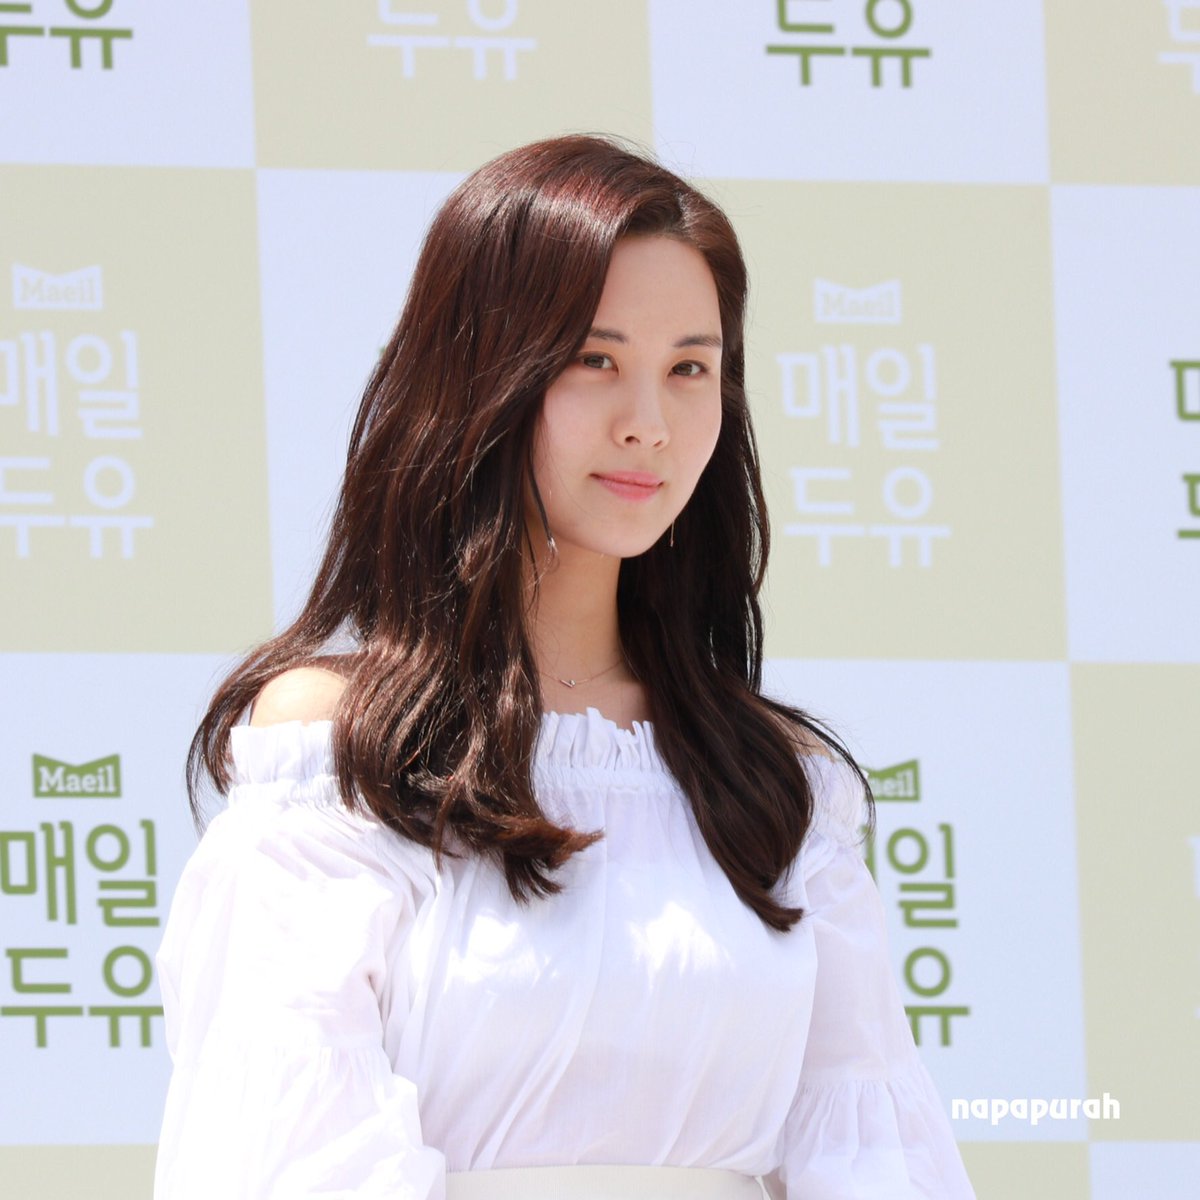  [PIC][03-06-2017]SeoHyun tham dự sự kiện “City Forestival - Maeil Duyou 'Confidence Diary'” vào chiều nay - Page 3 DBpDHjkV0AAzu2I